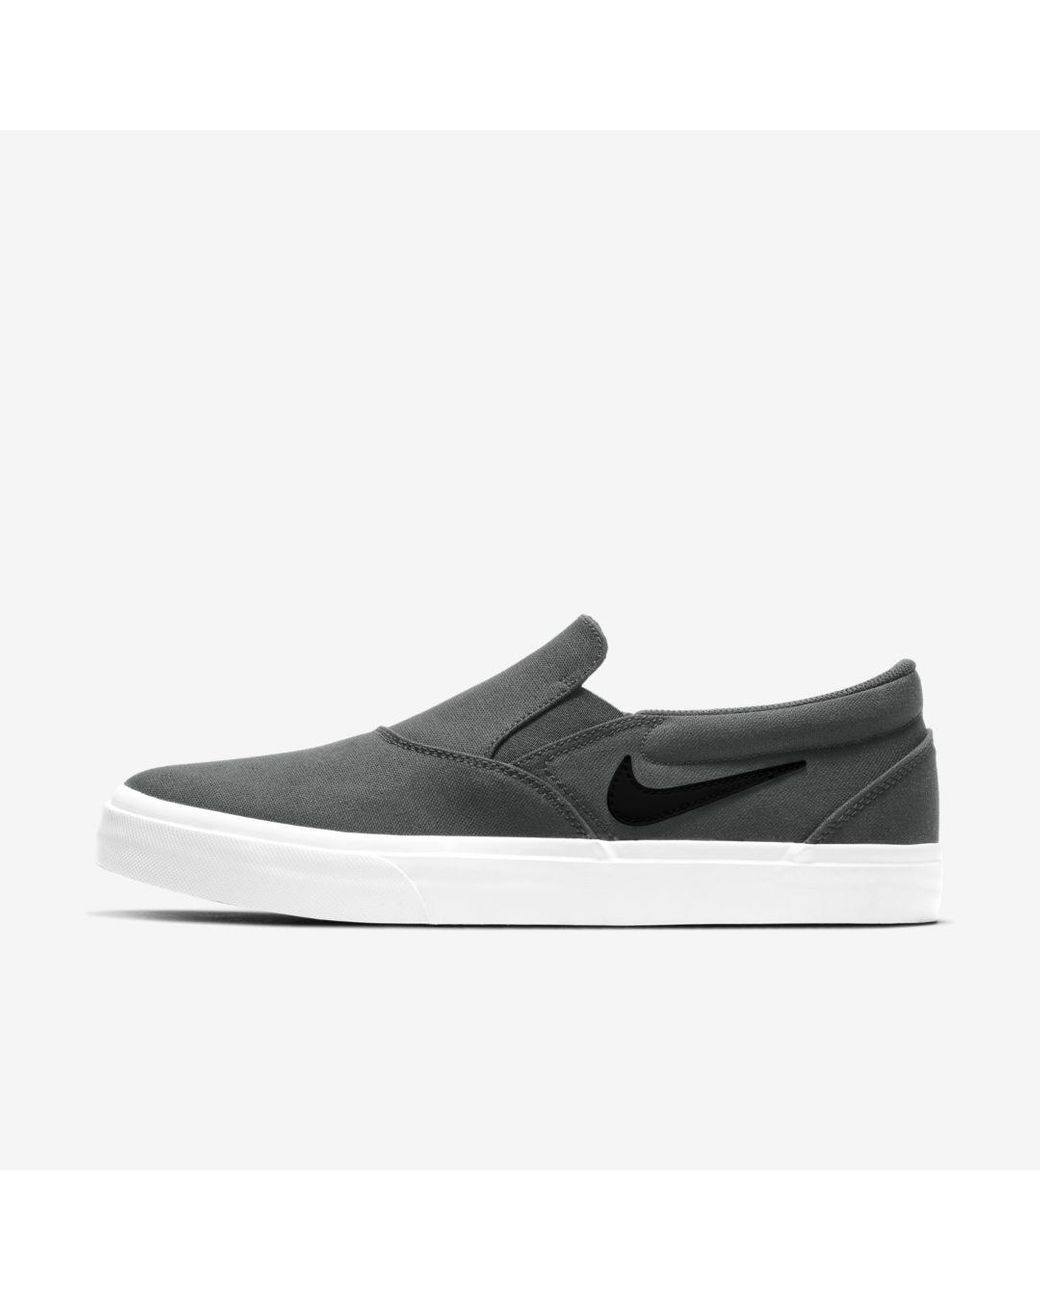 Nike Sb Charge Slip Skate Shoe (iron 